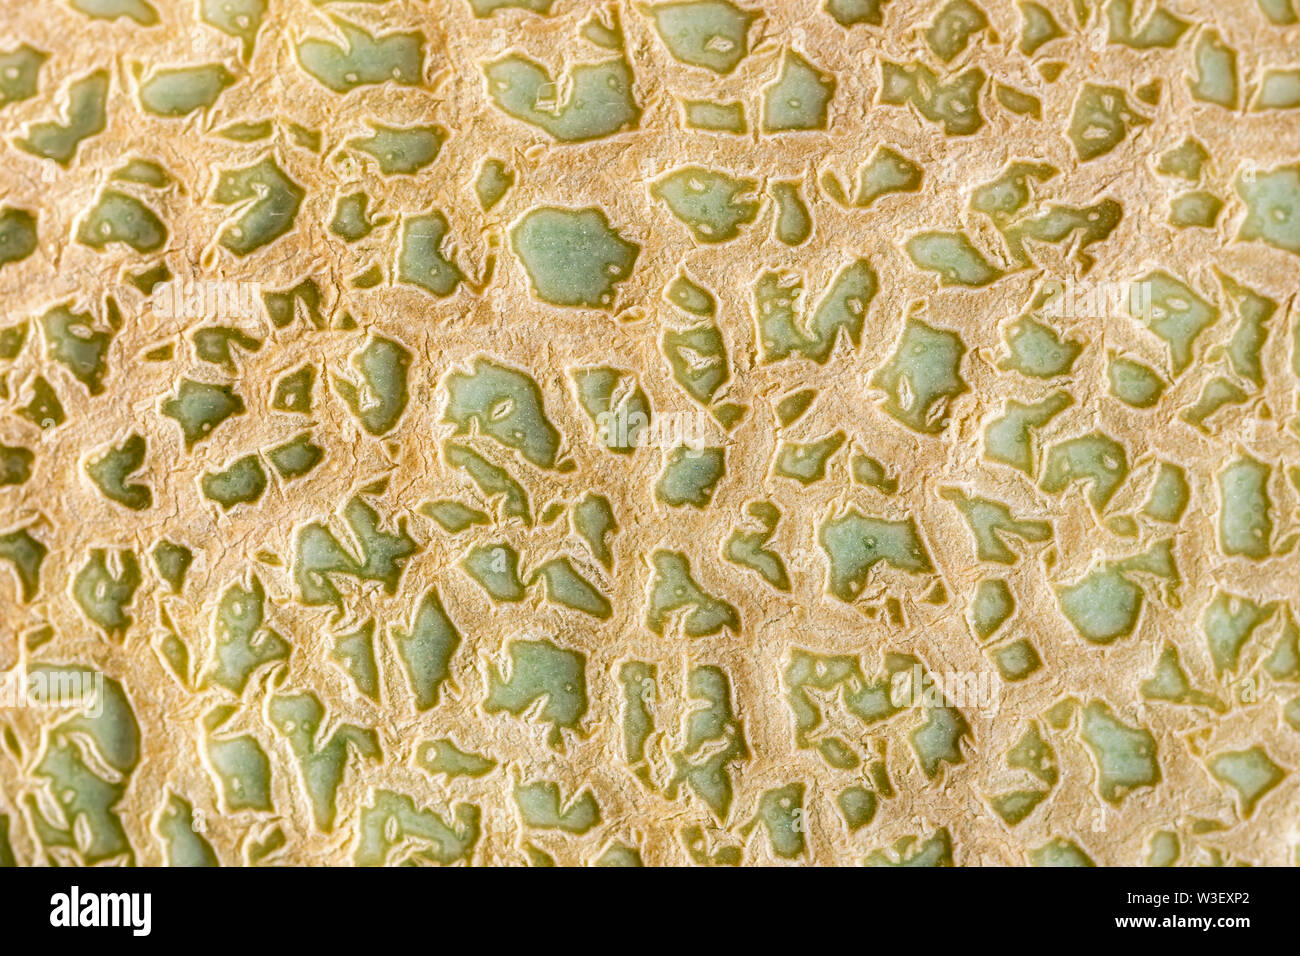 Closeup view of cantaloupe skin texture Stock Photo